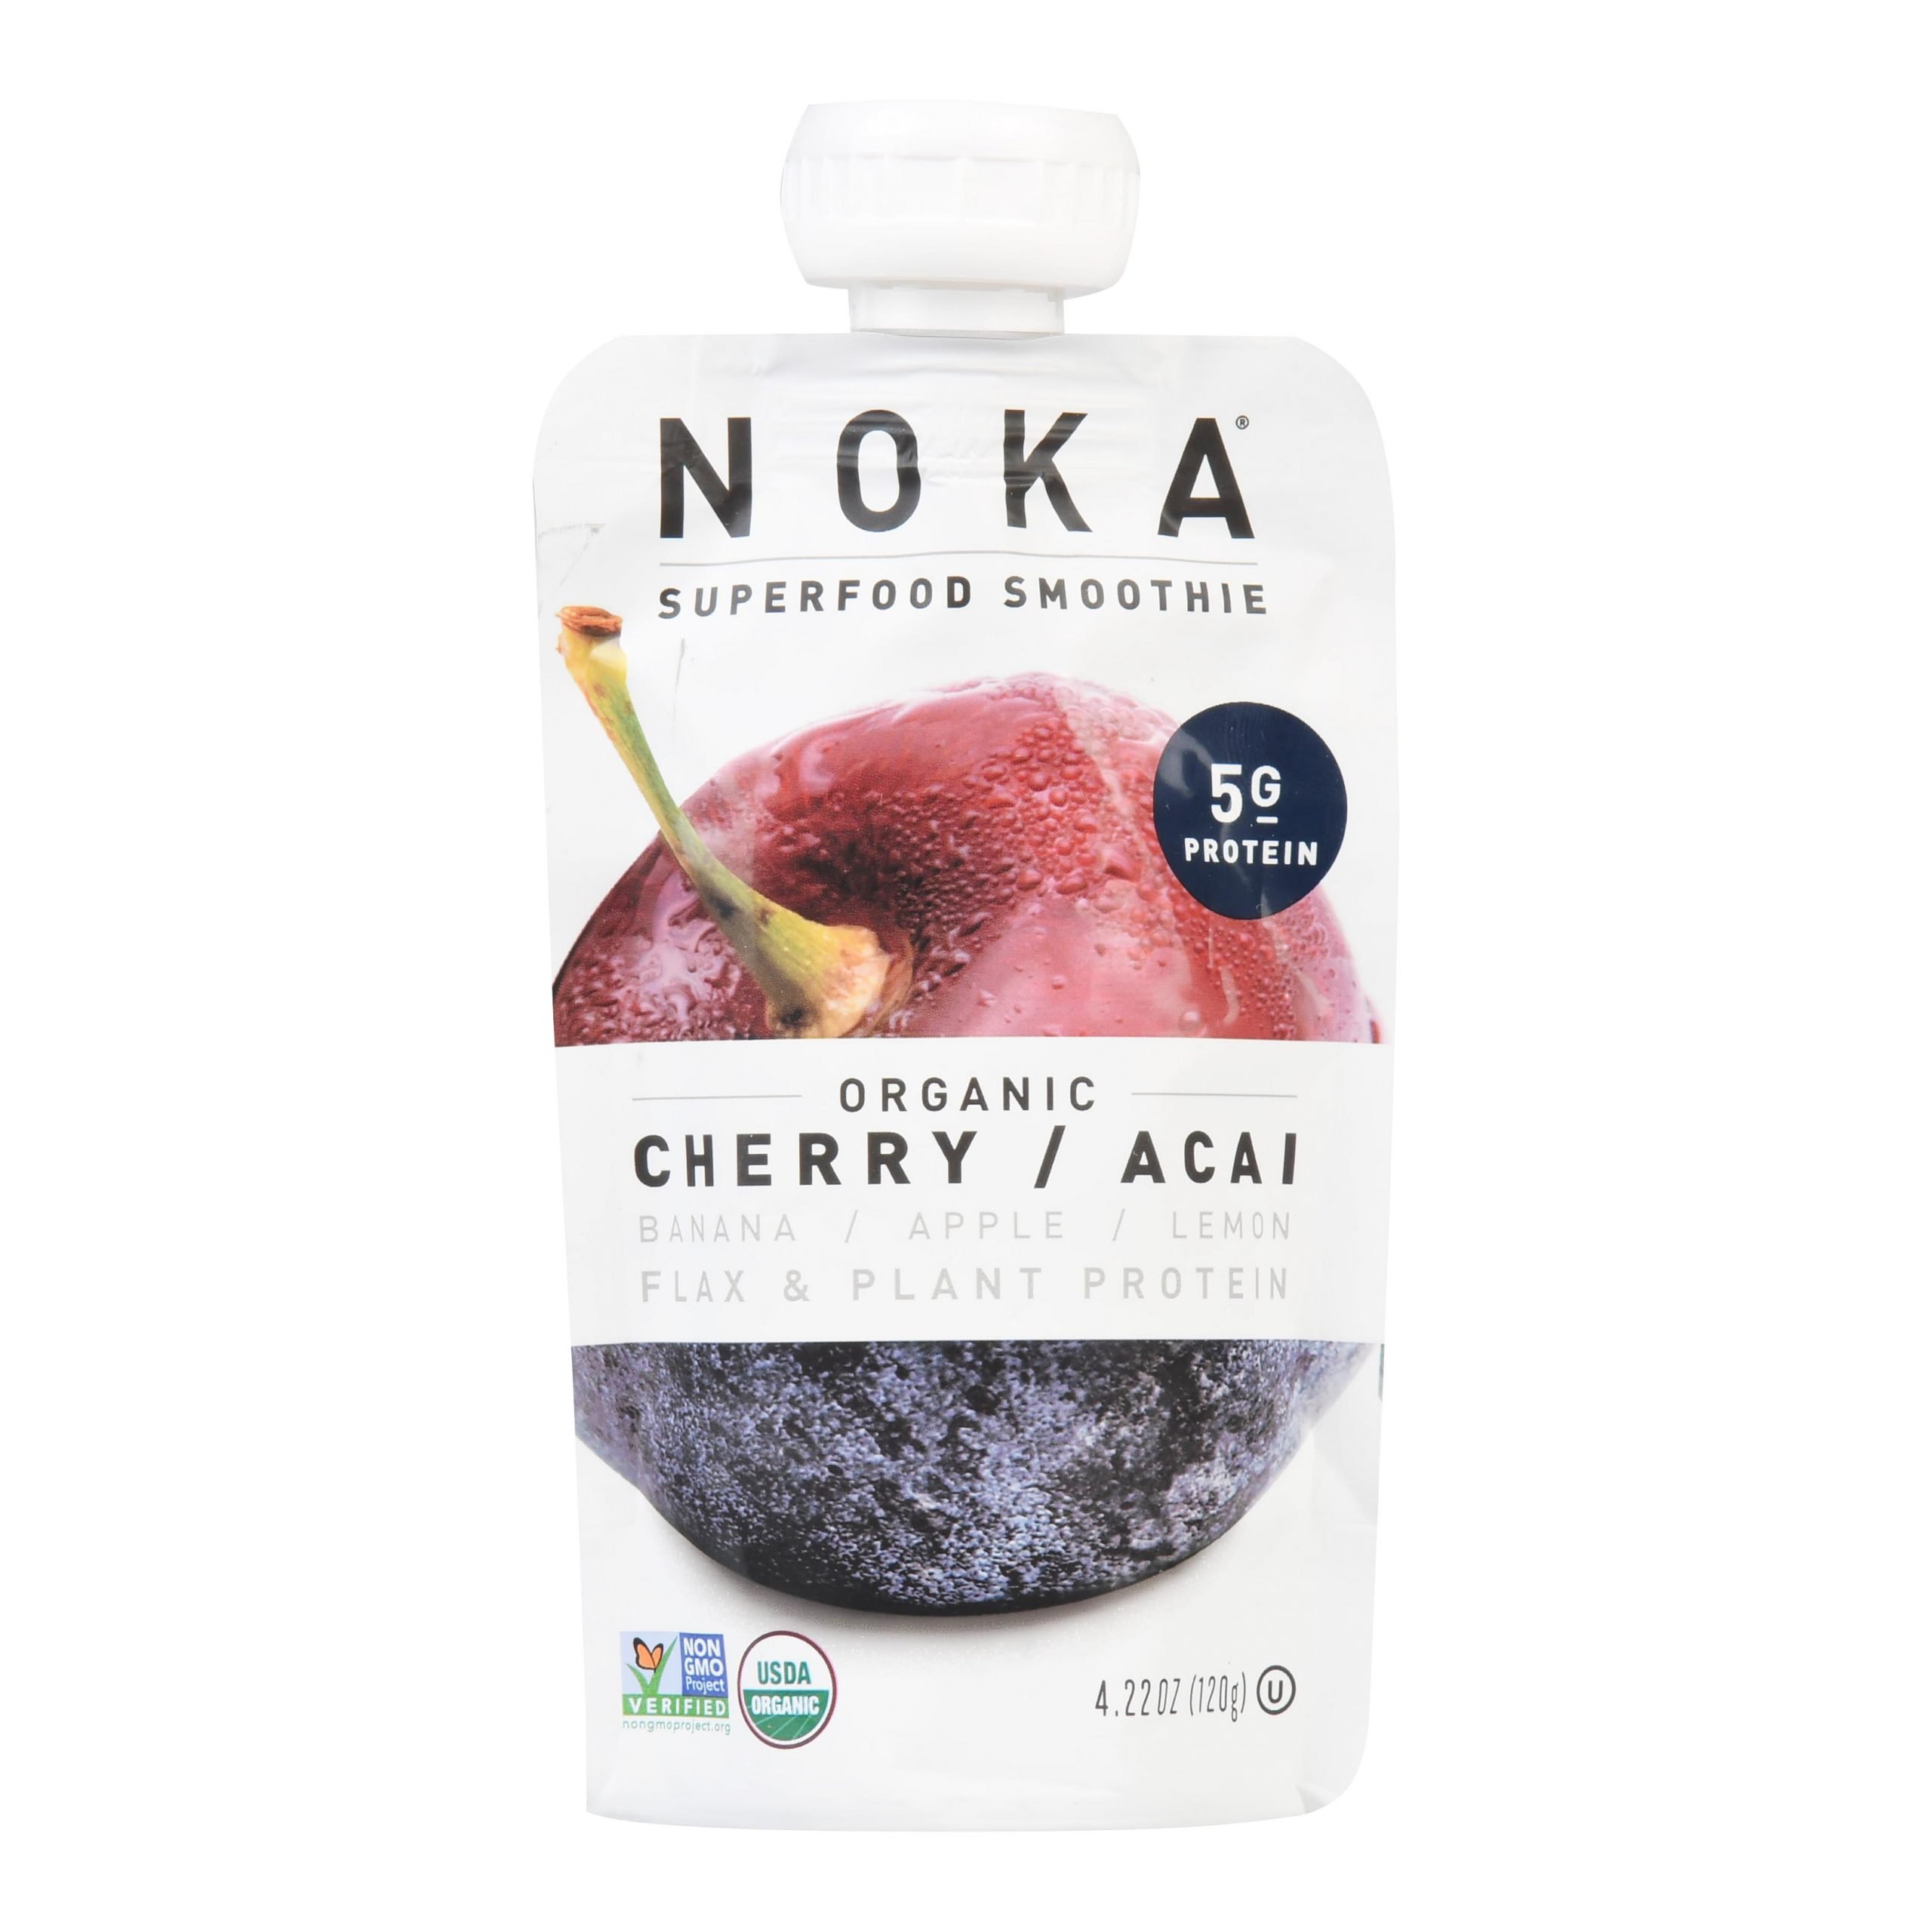 NOKA Superfood Smoothie Organic Cherry/Acai, 4.22 oz